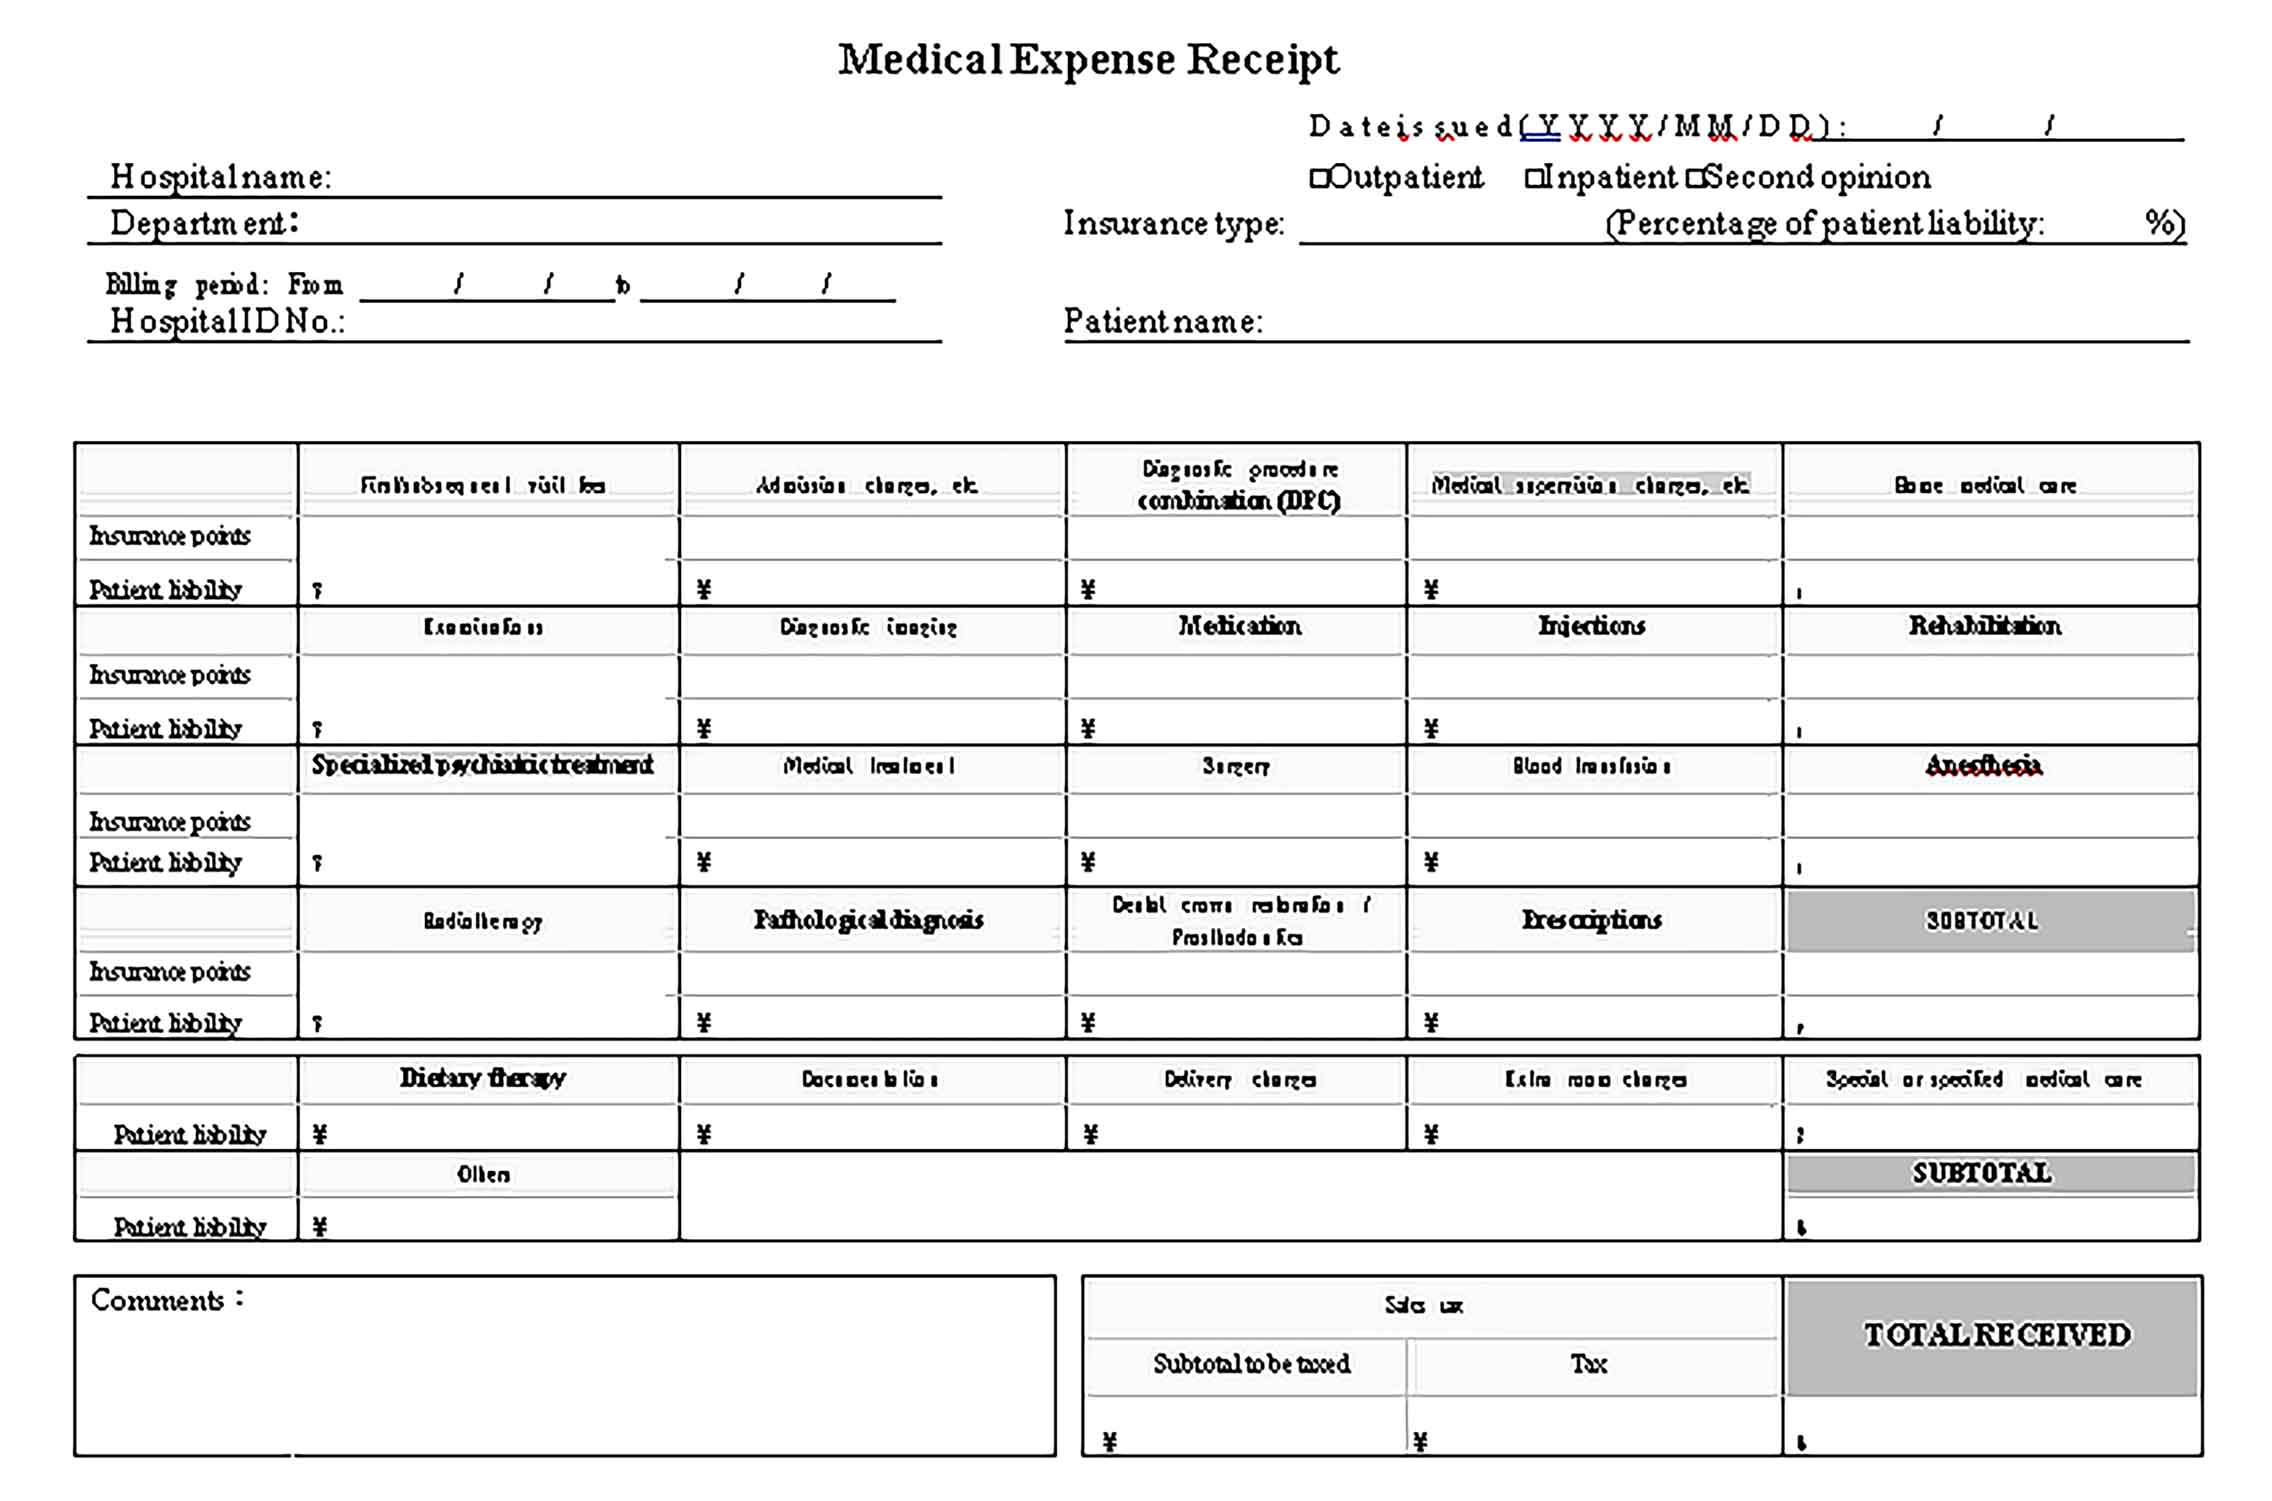 Sample Medical Expense Receipt Templates 1